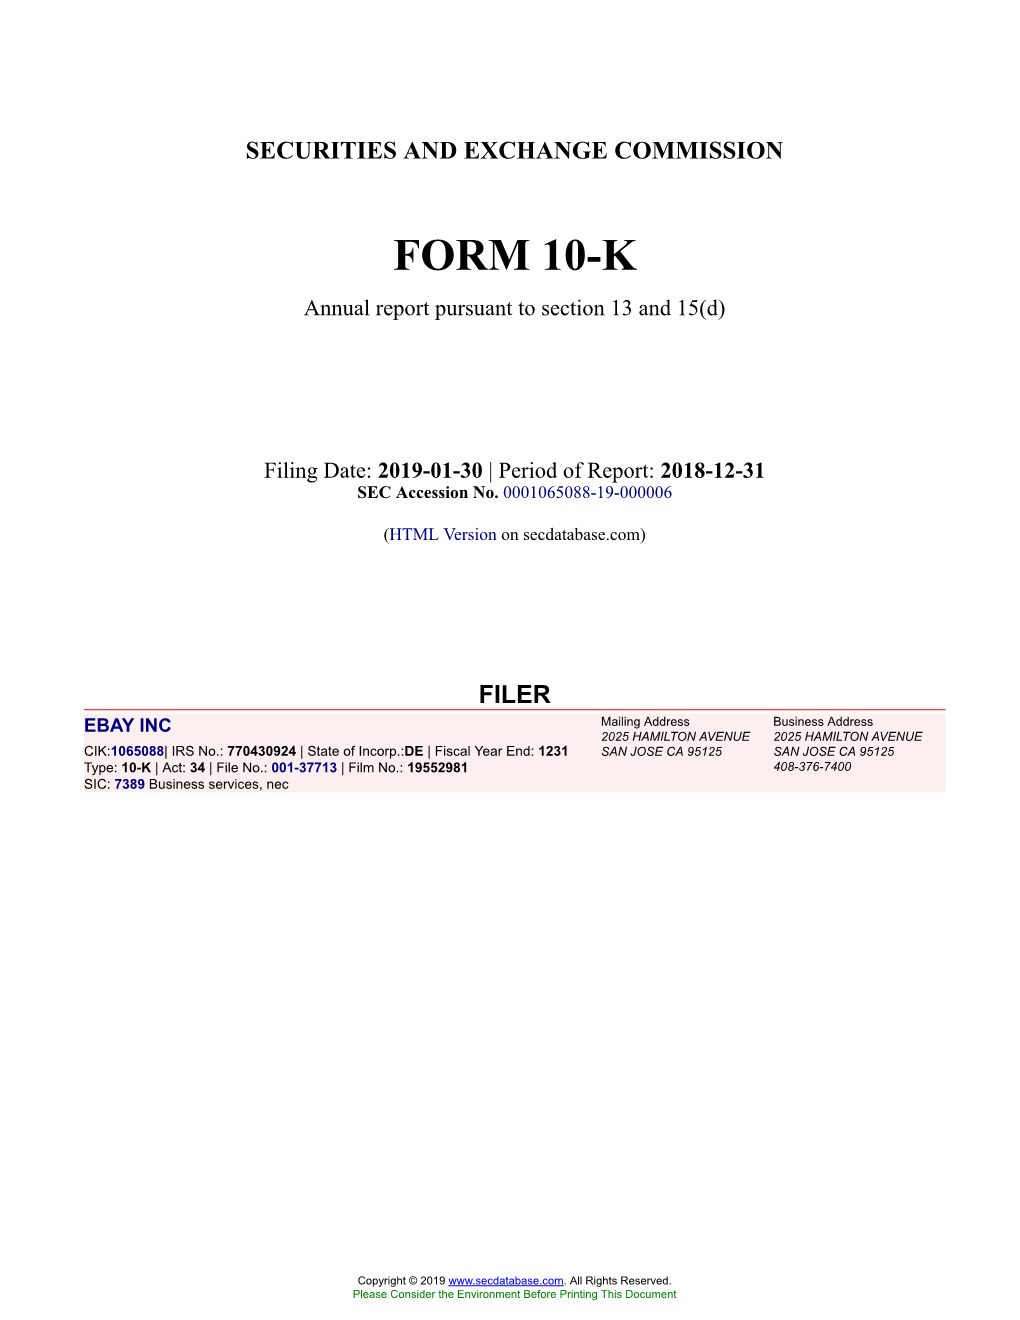 EBAY INC Form 10-K Annual Report Filed 2019-01-30